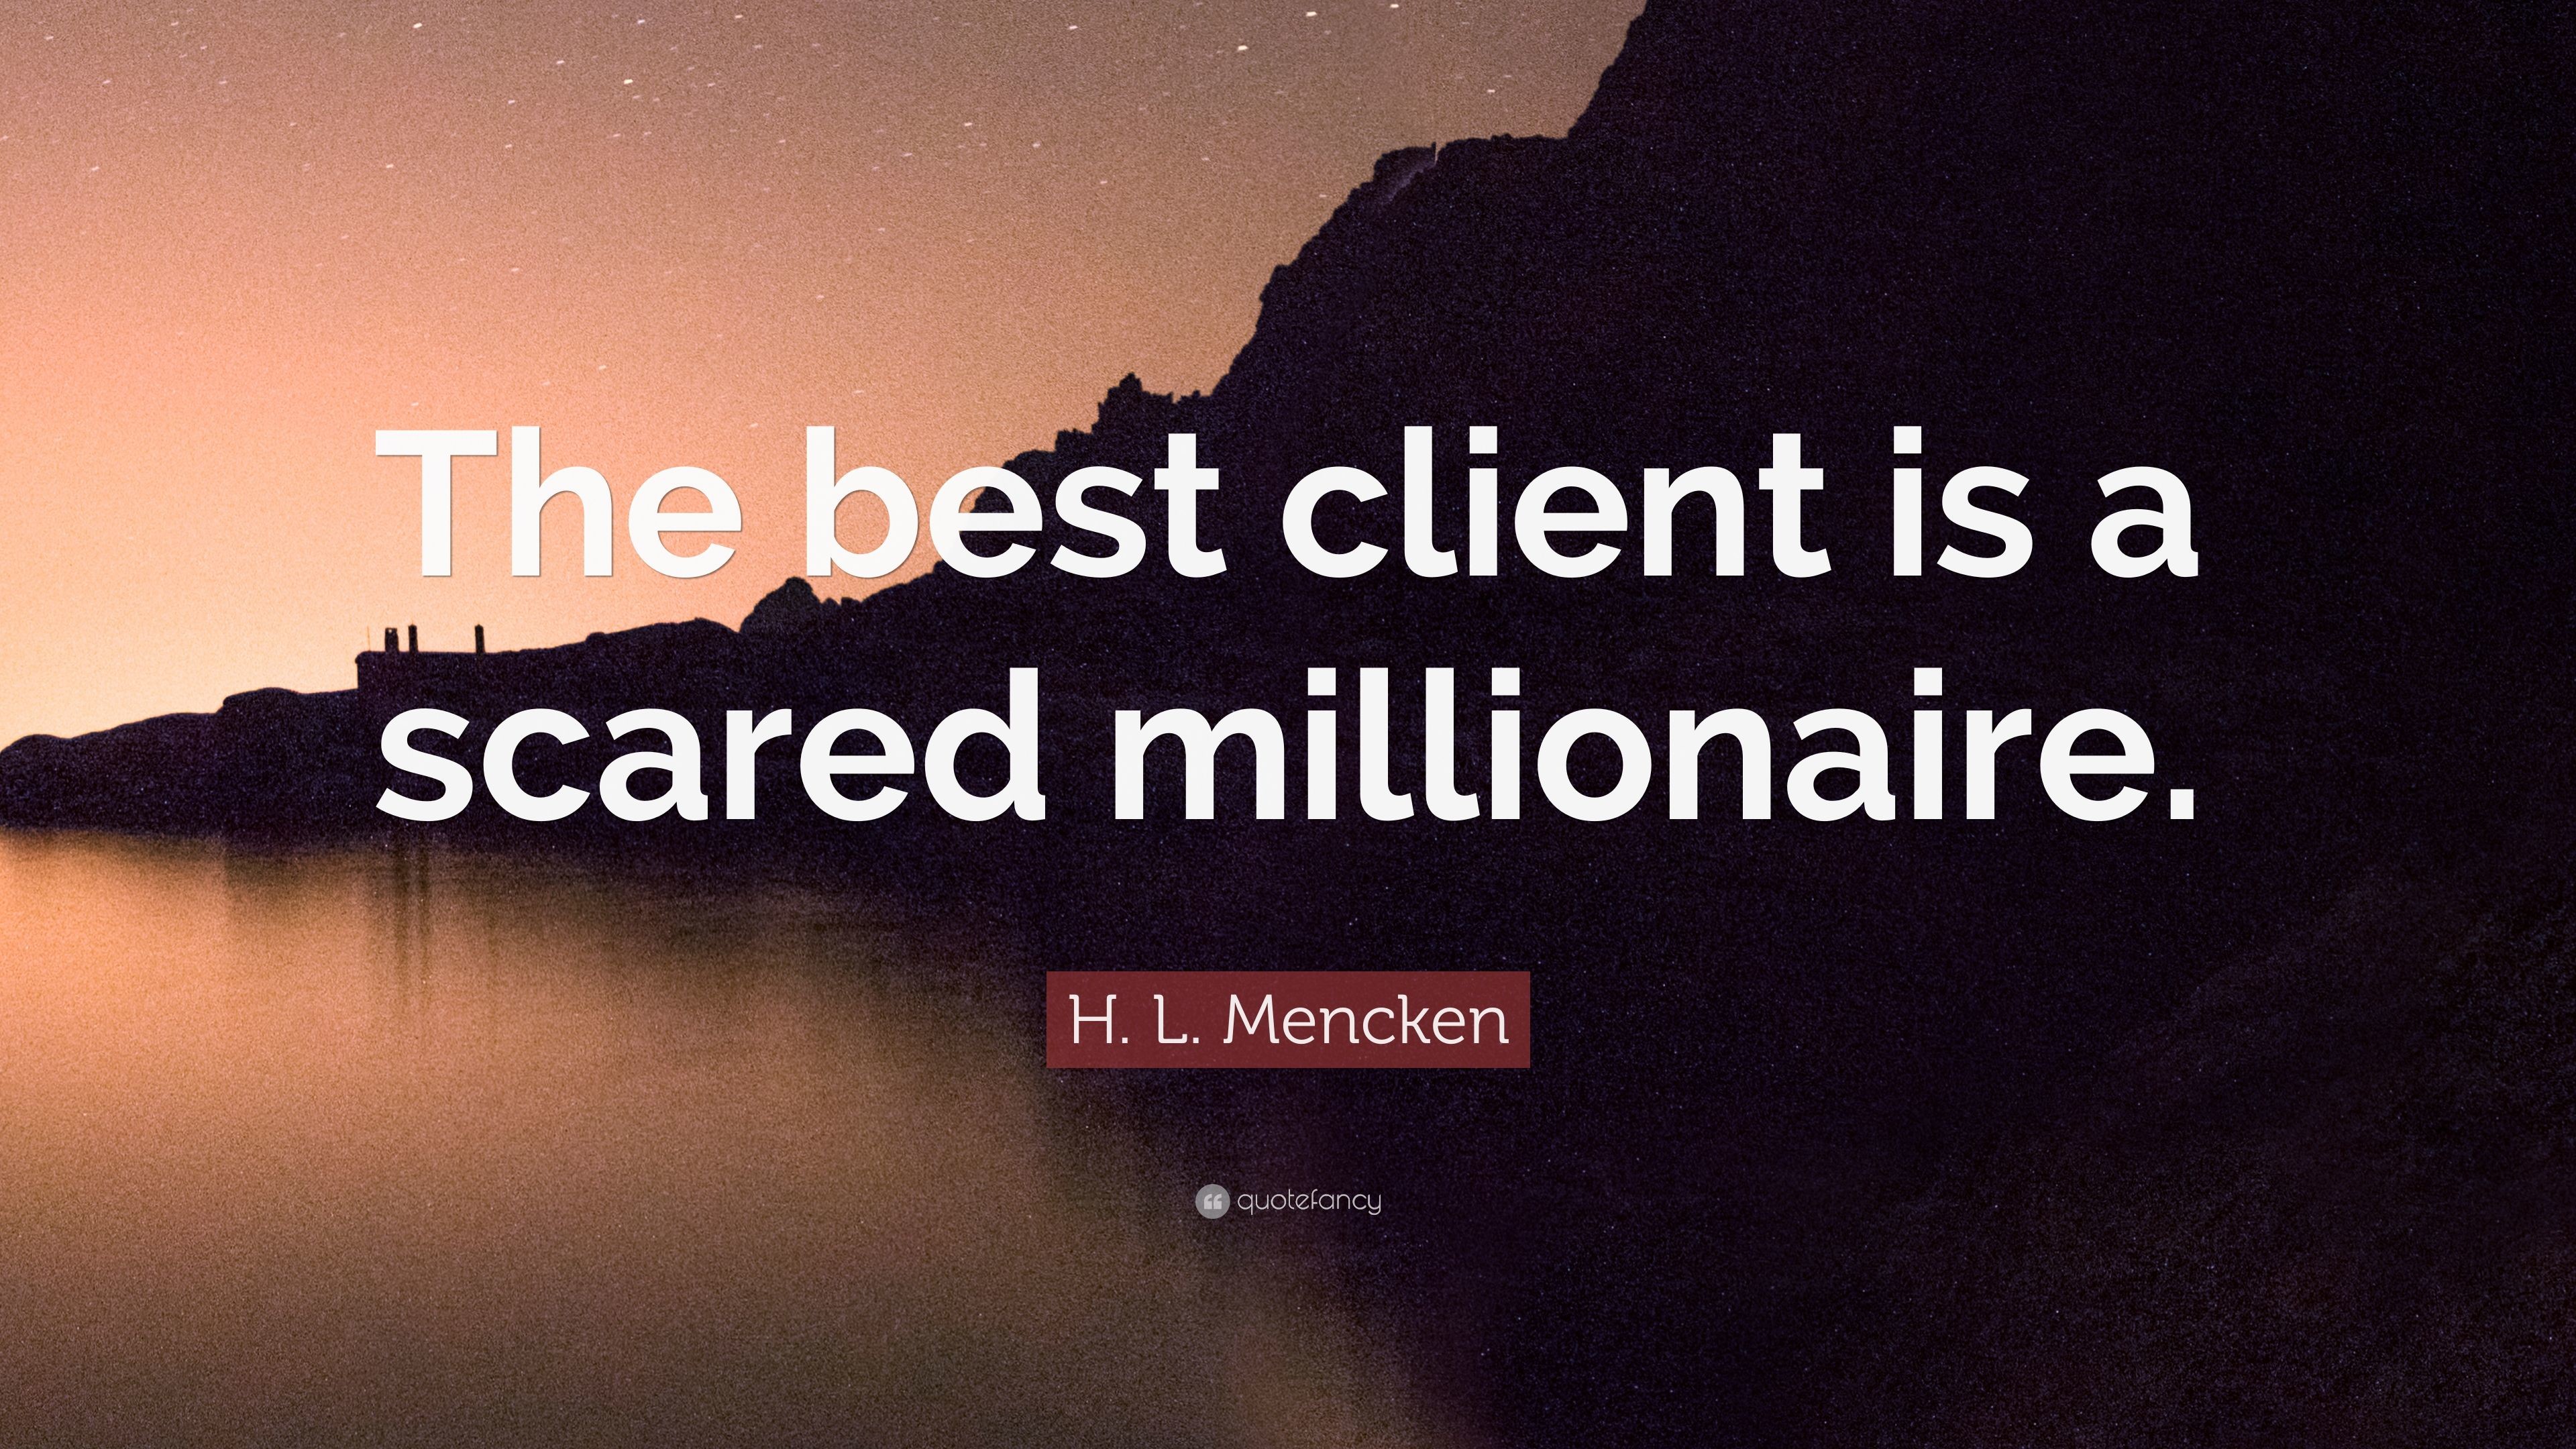 3840x2160 H. L. Mencken Quote: “The best client is a scared millionaire.”